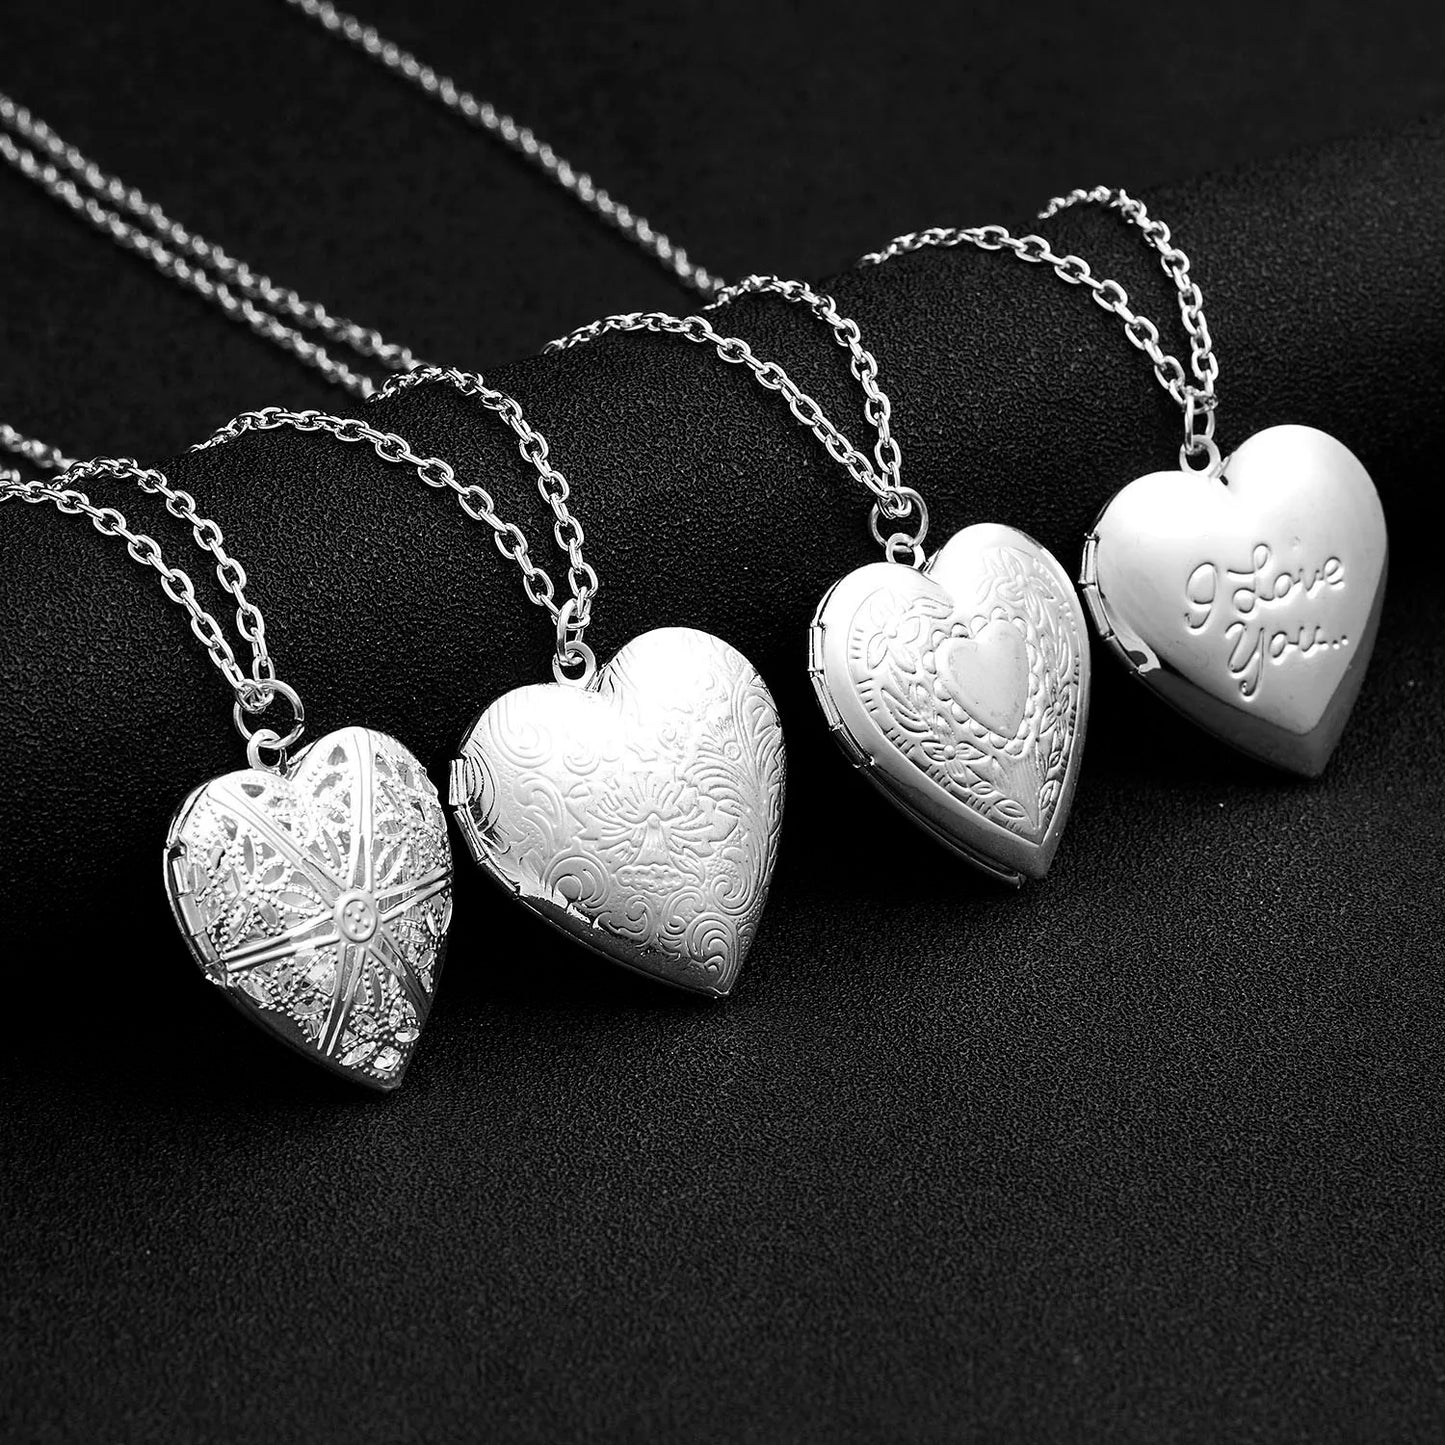 Treasure's Unique Heart-shaped Necklace